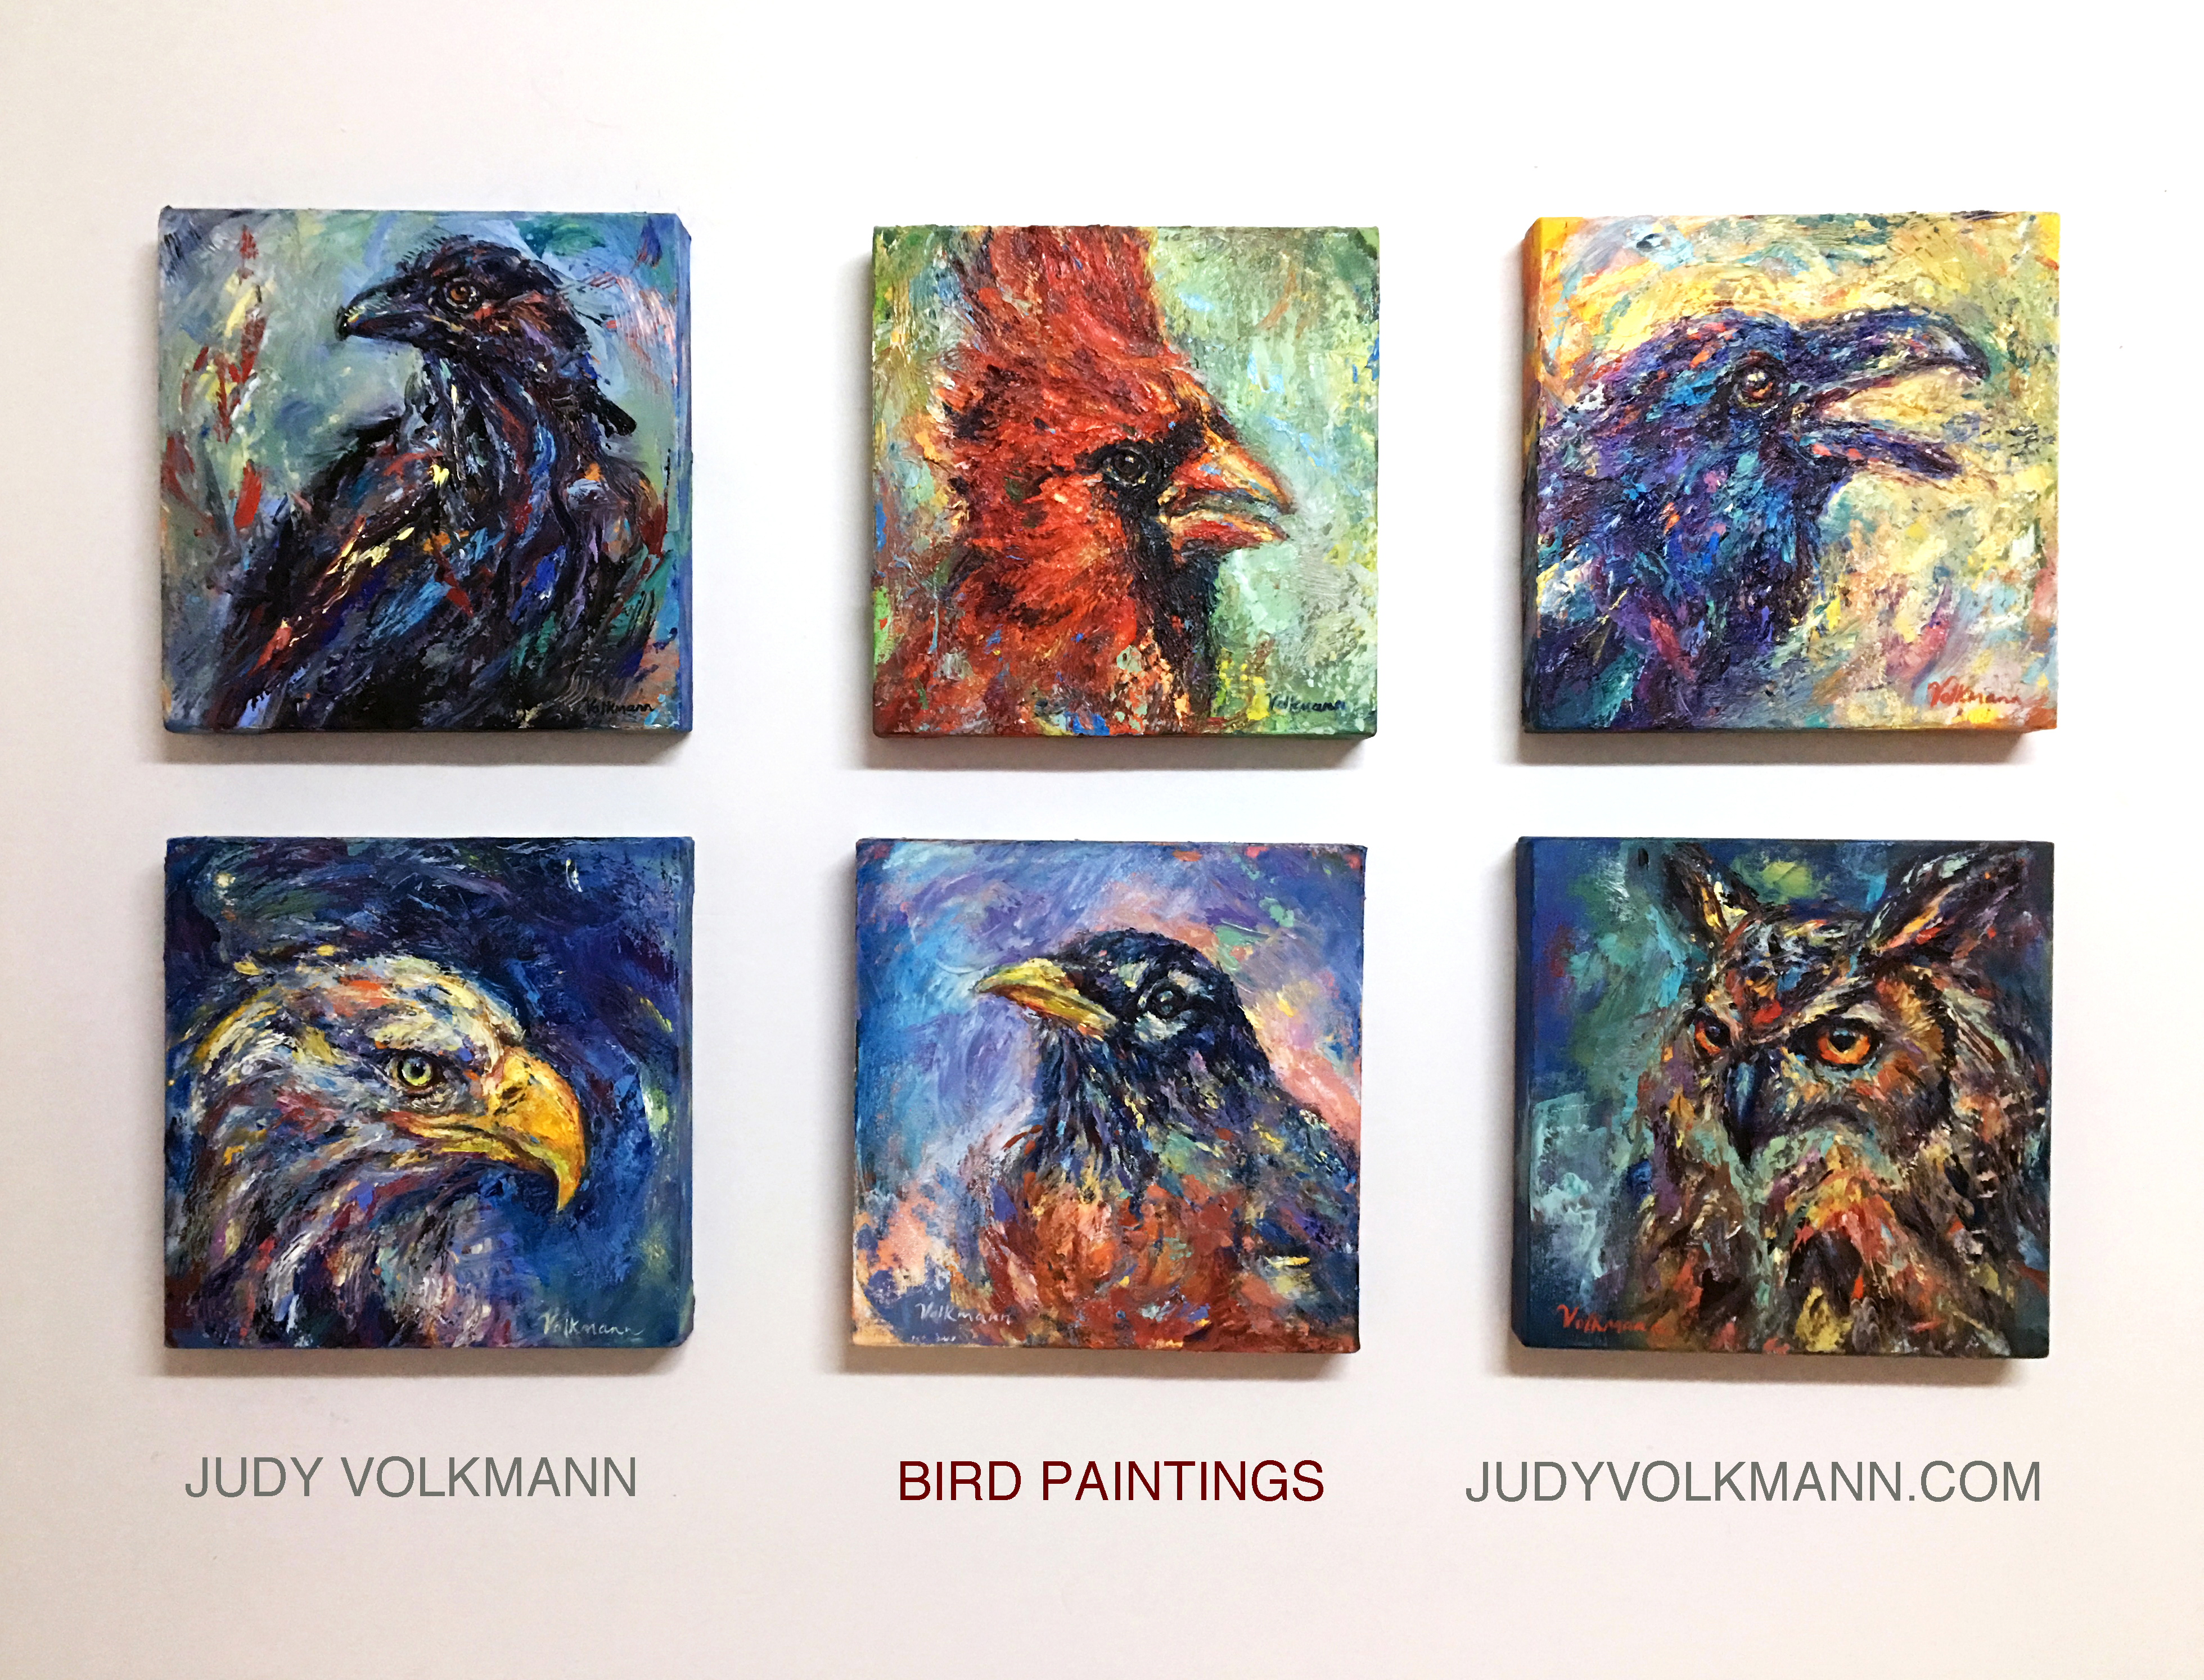 New! Bird paintings by Judy Volkmann